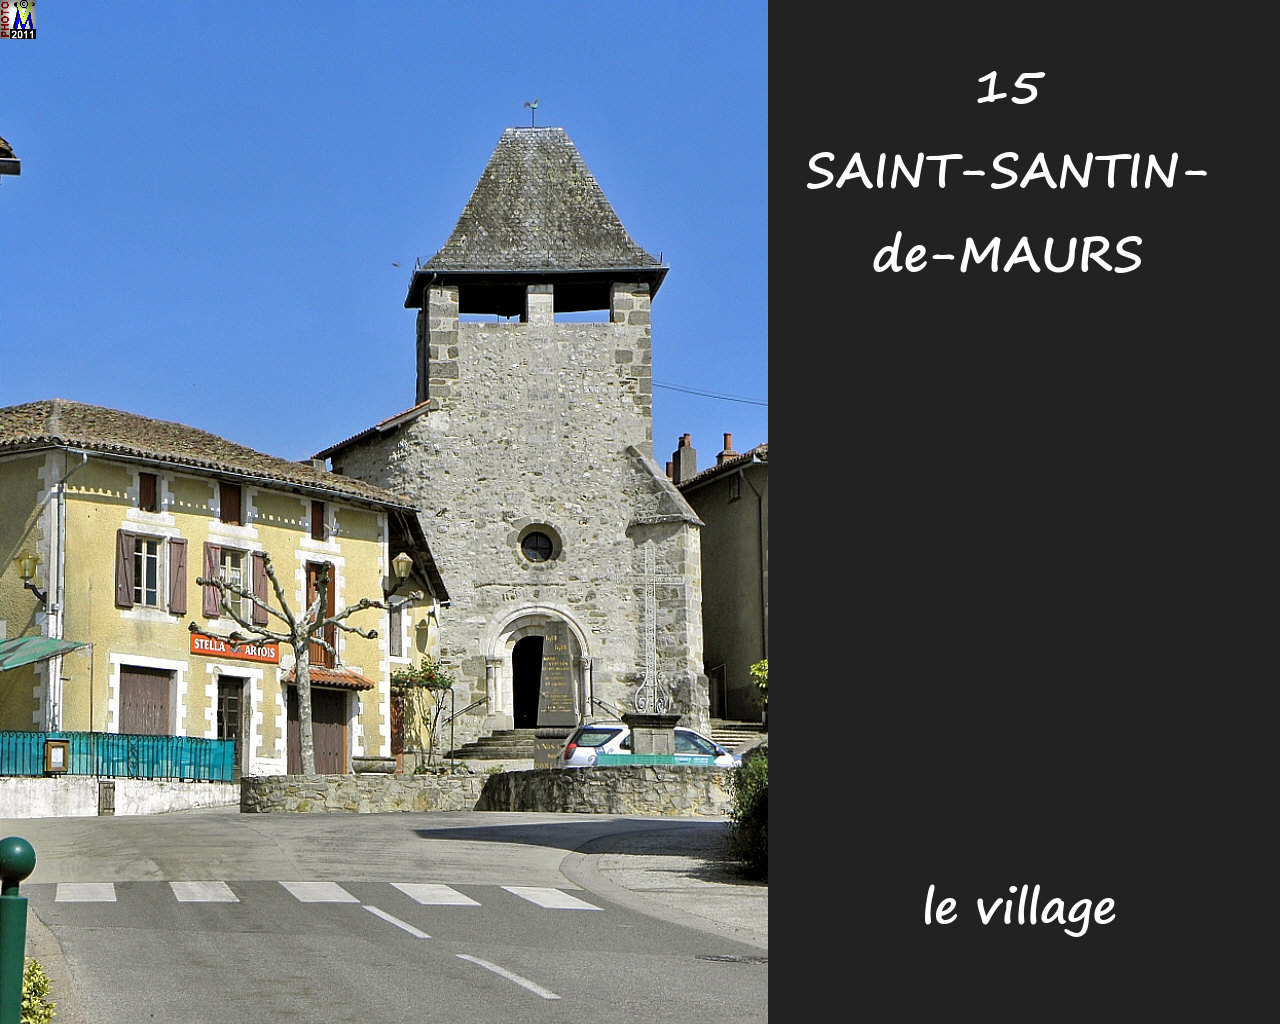 15StSANTIN-de-MAURS_village_100.jpg